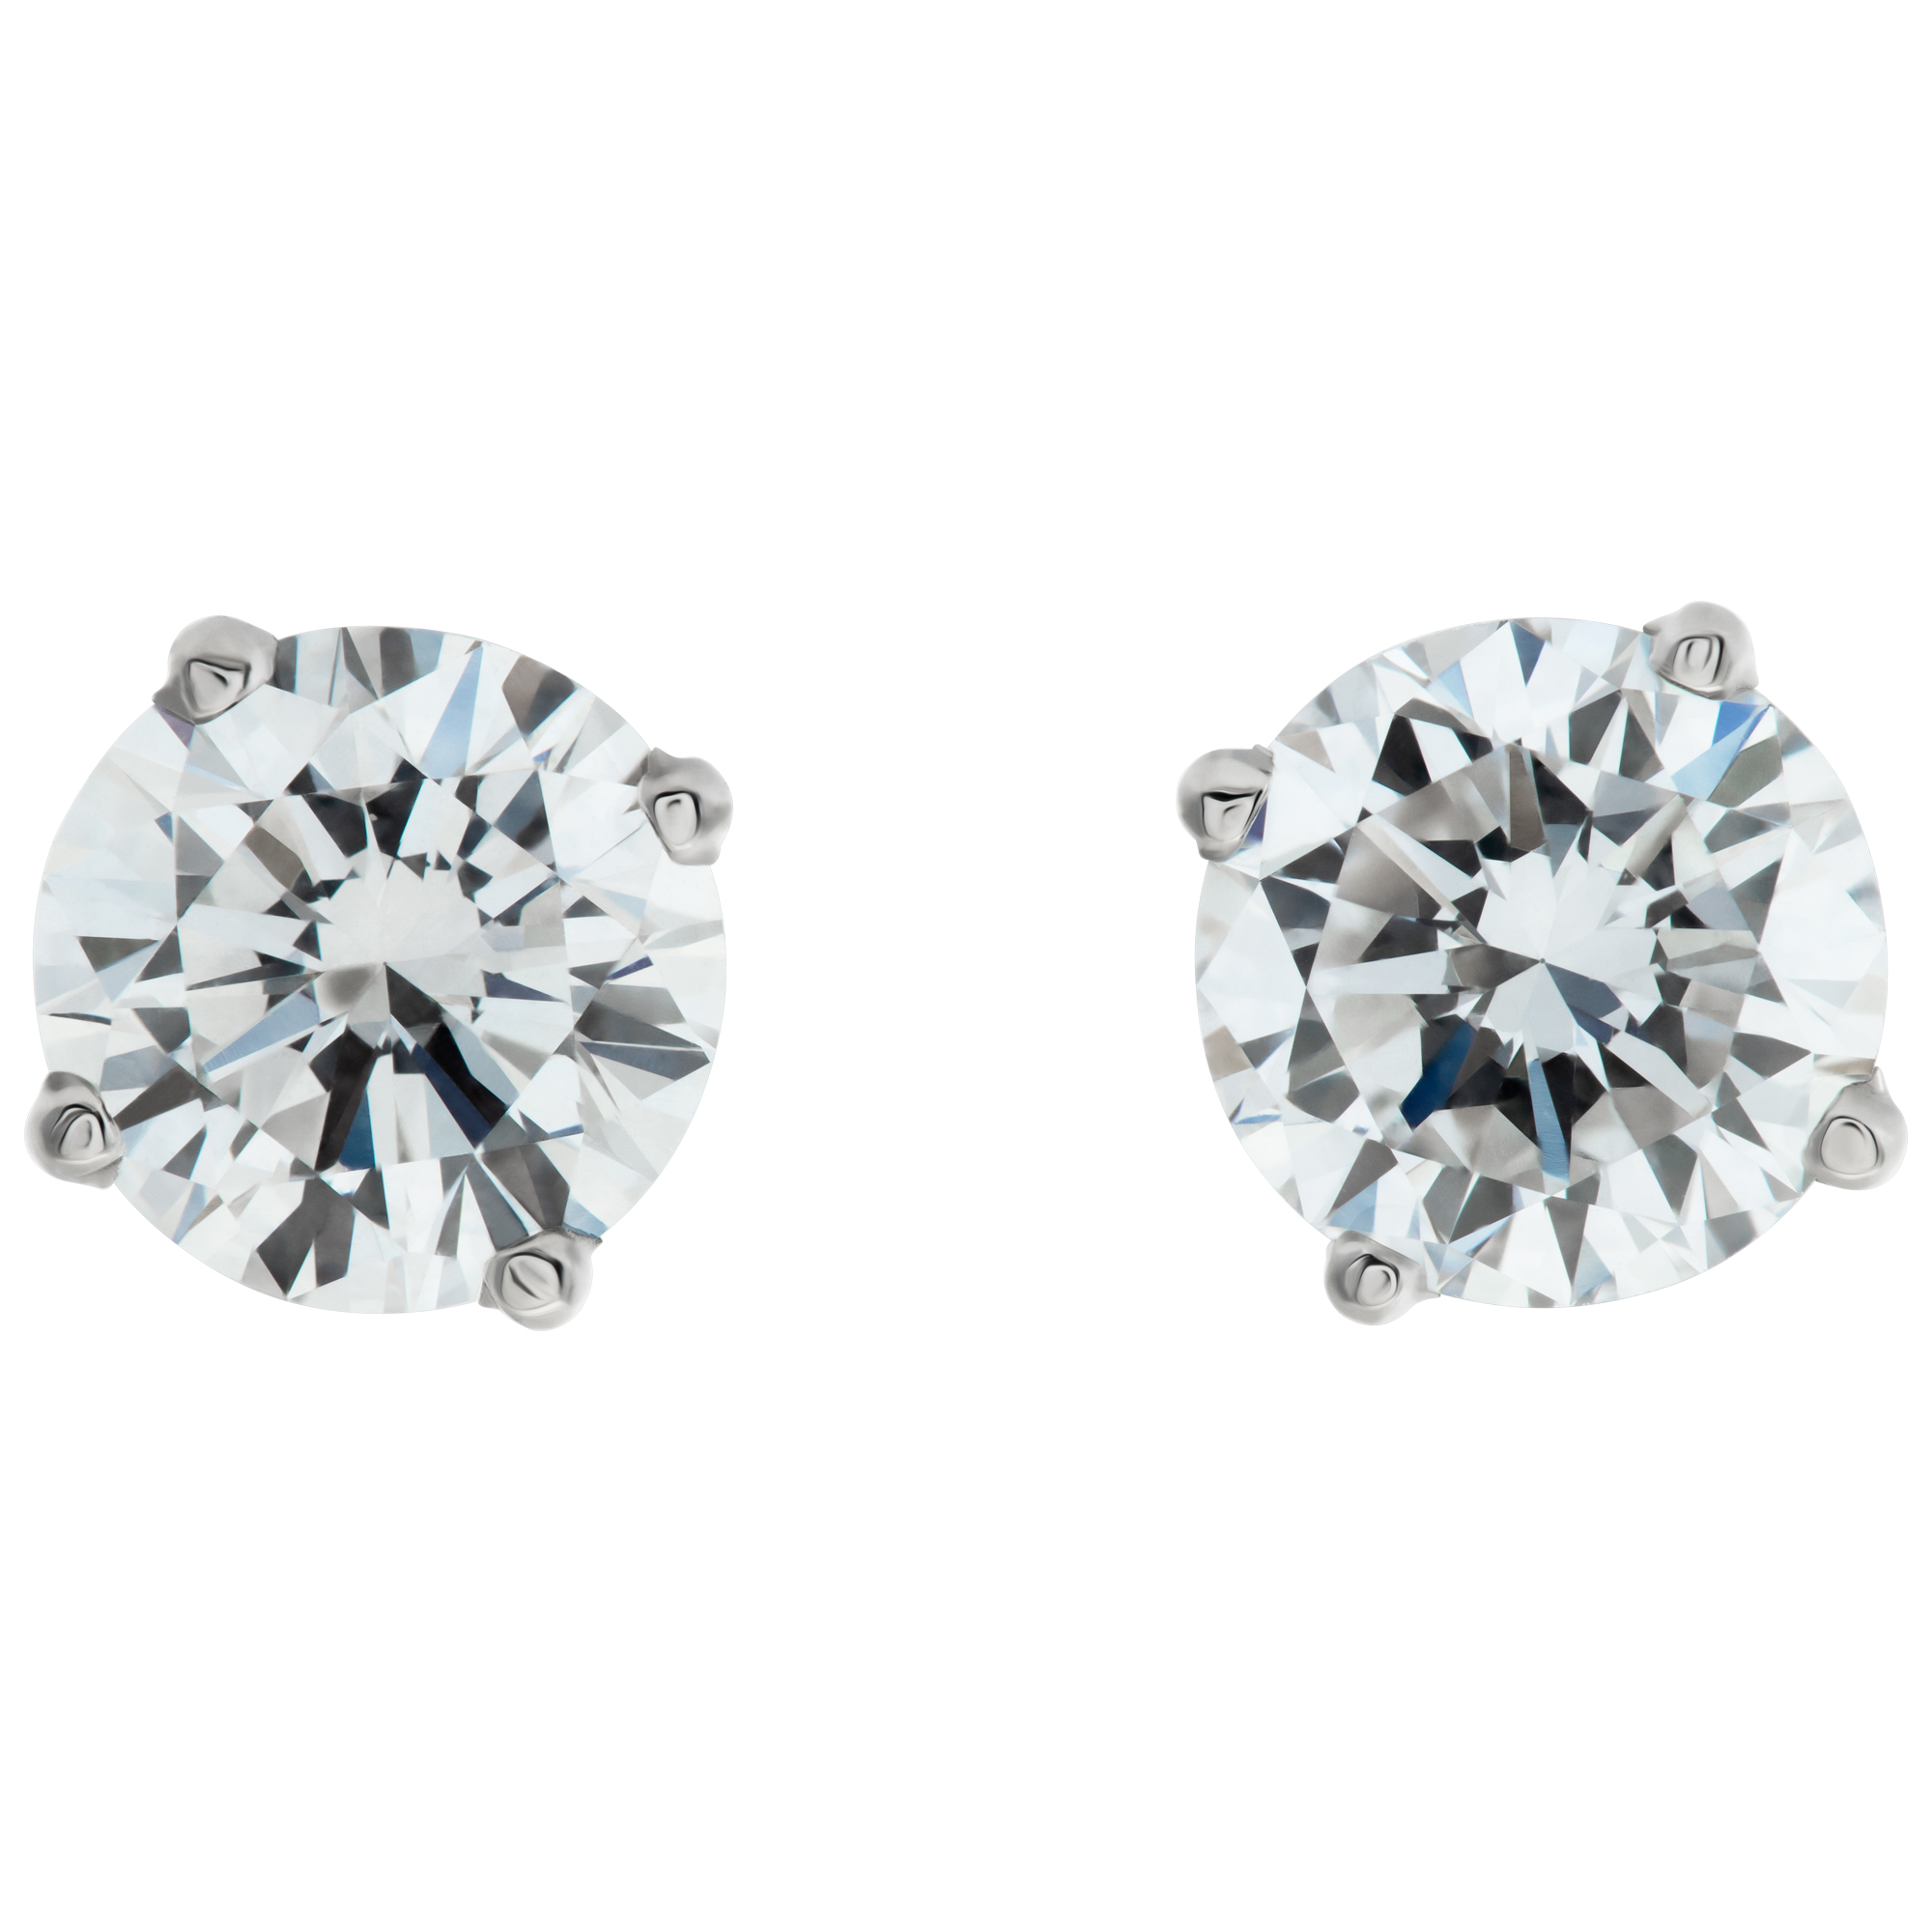 GIA certified round brilliant cut diamond studs 1.02 carat (E color, VS2 clarity) and 1.01 carat (E color, VS1 clarity image 1